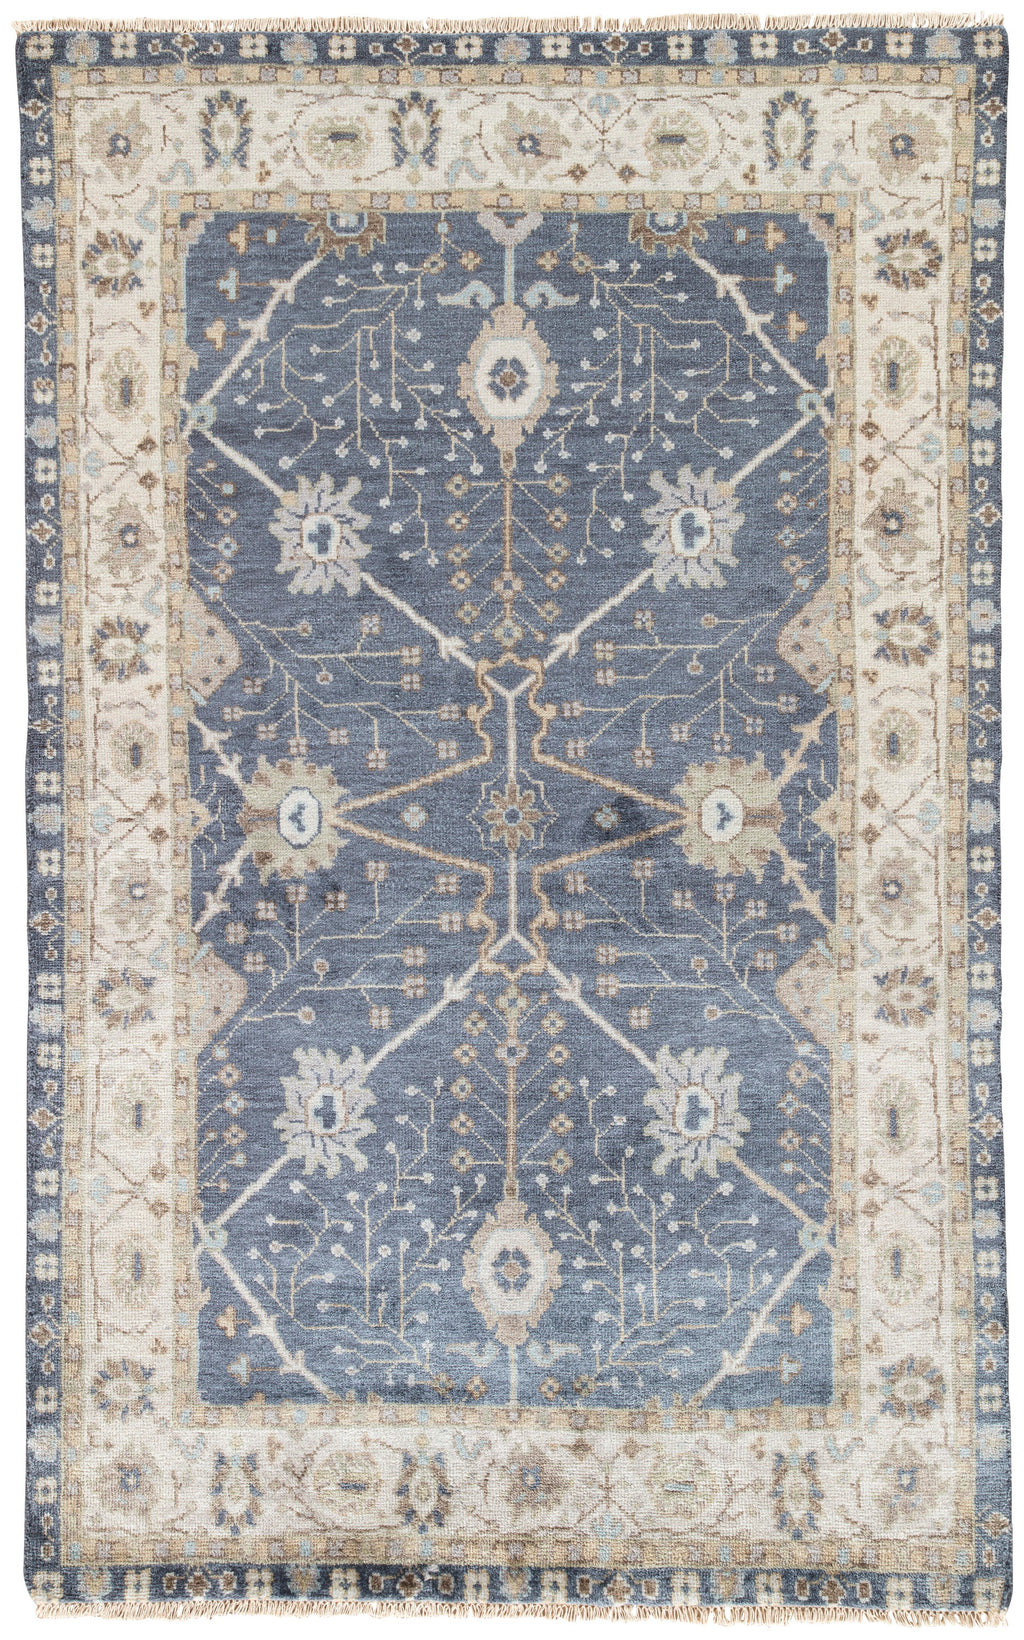 ans02 princeton floral rug design by jaipur 1